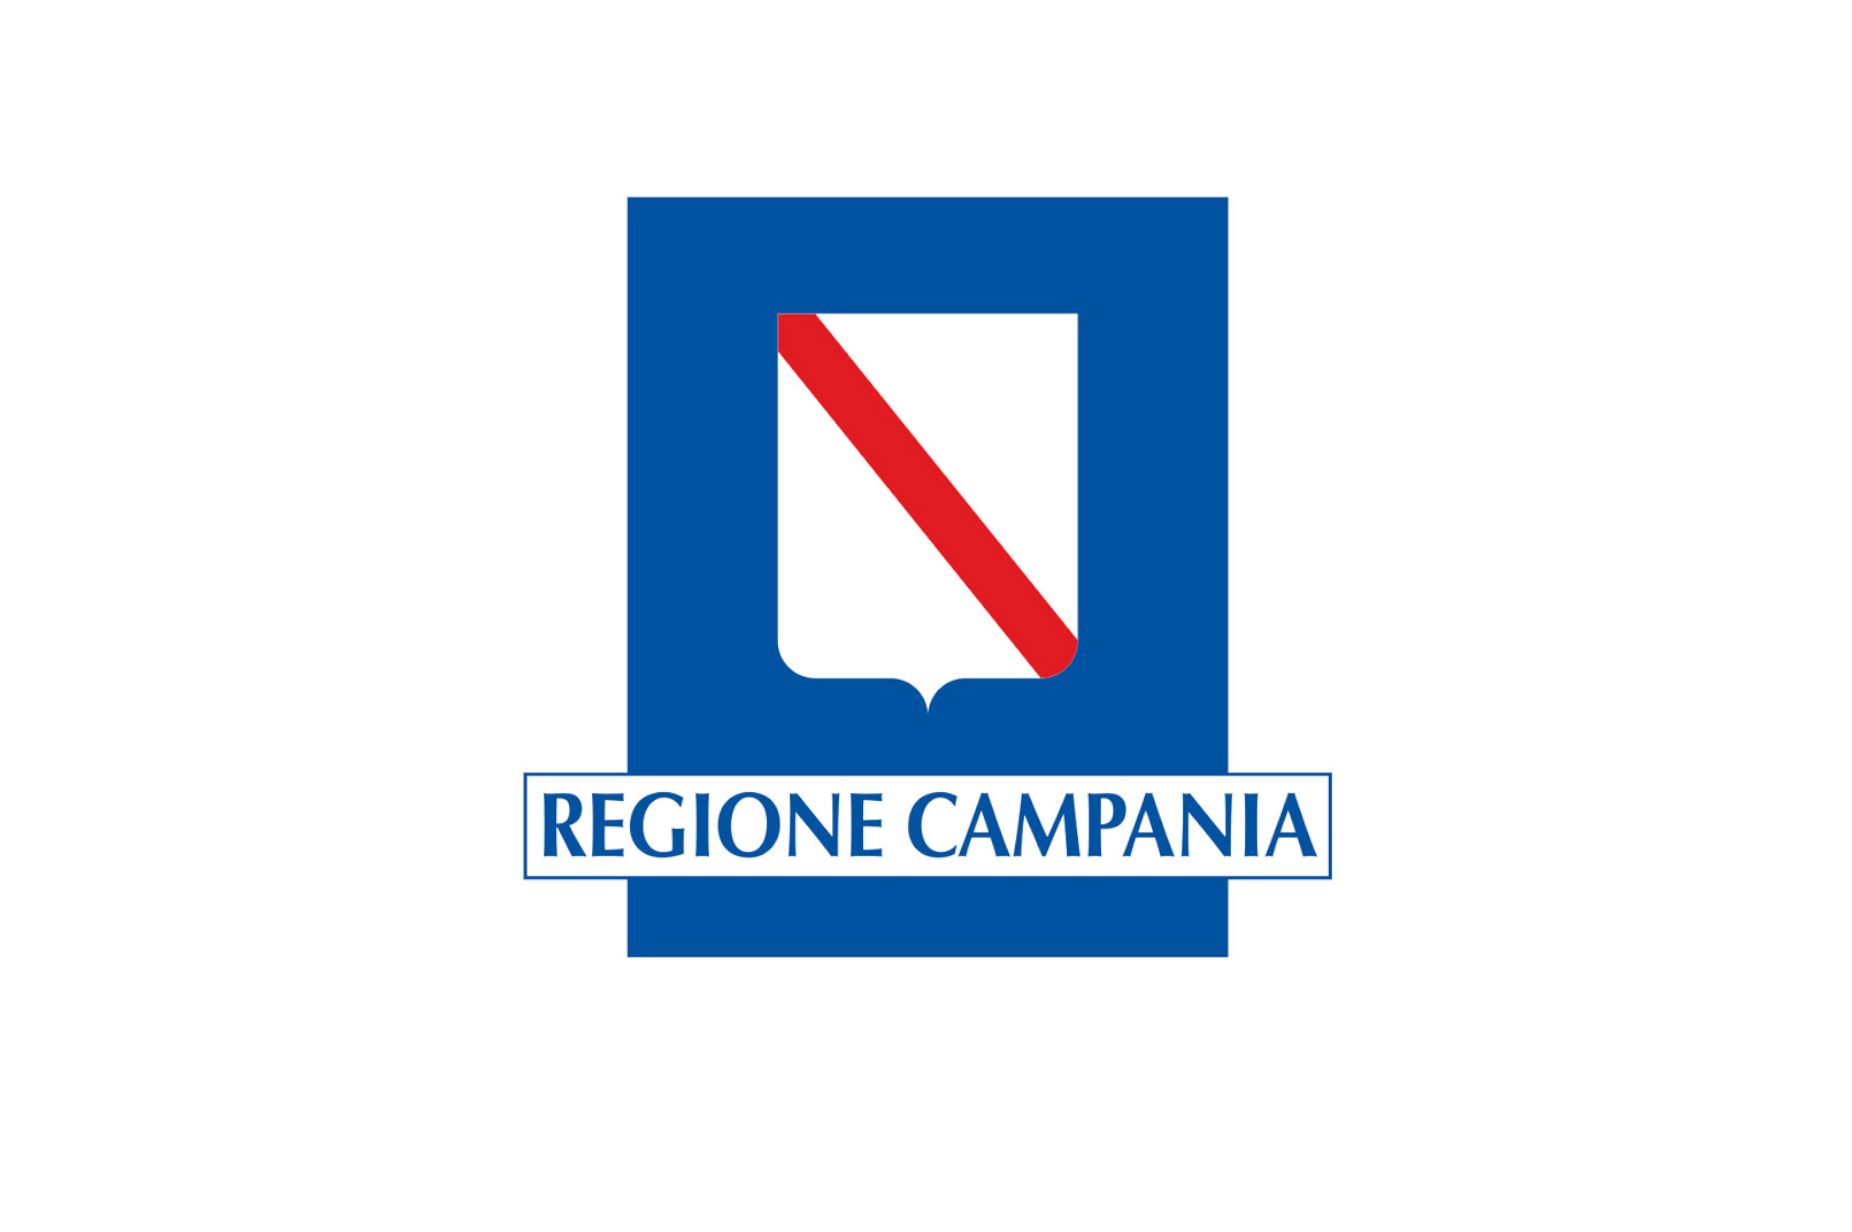 Region of ecampania logo